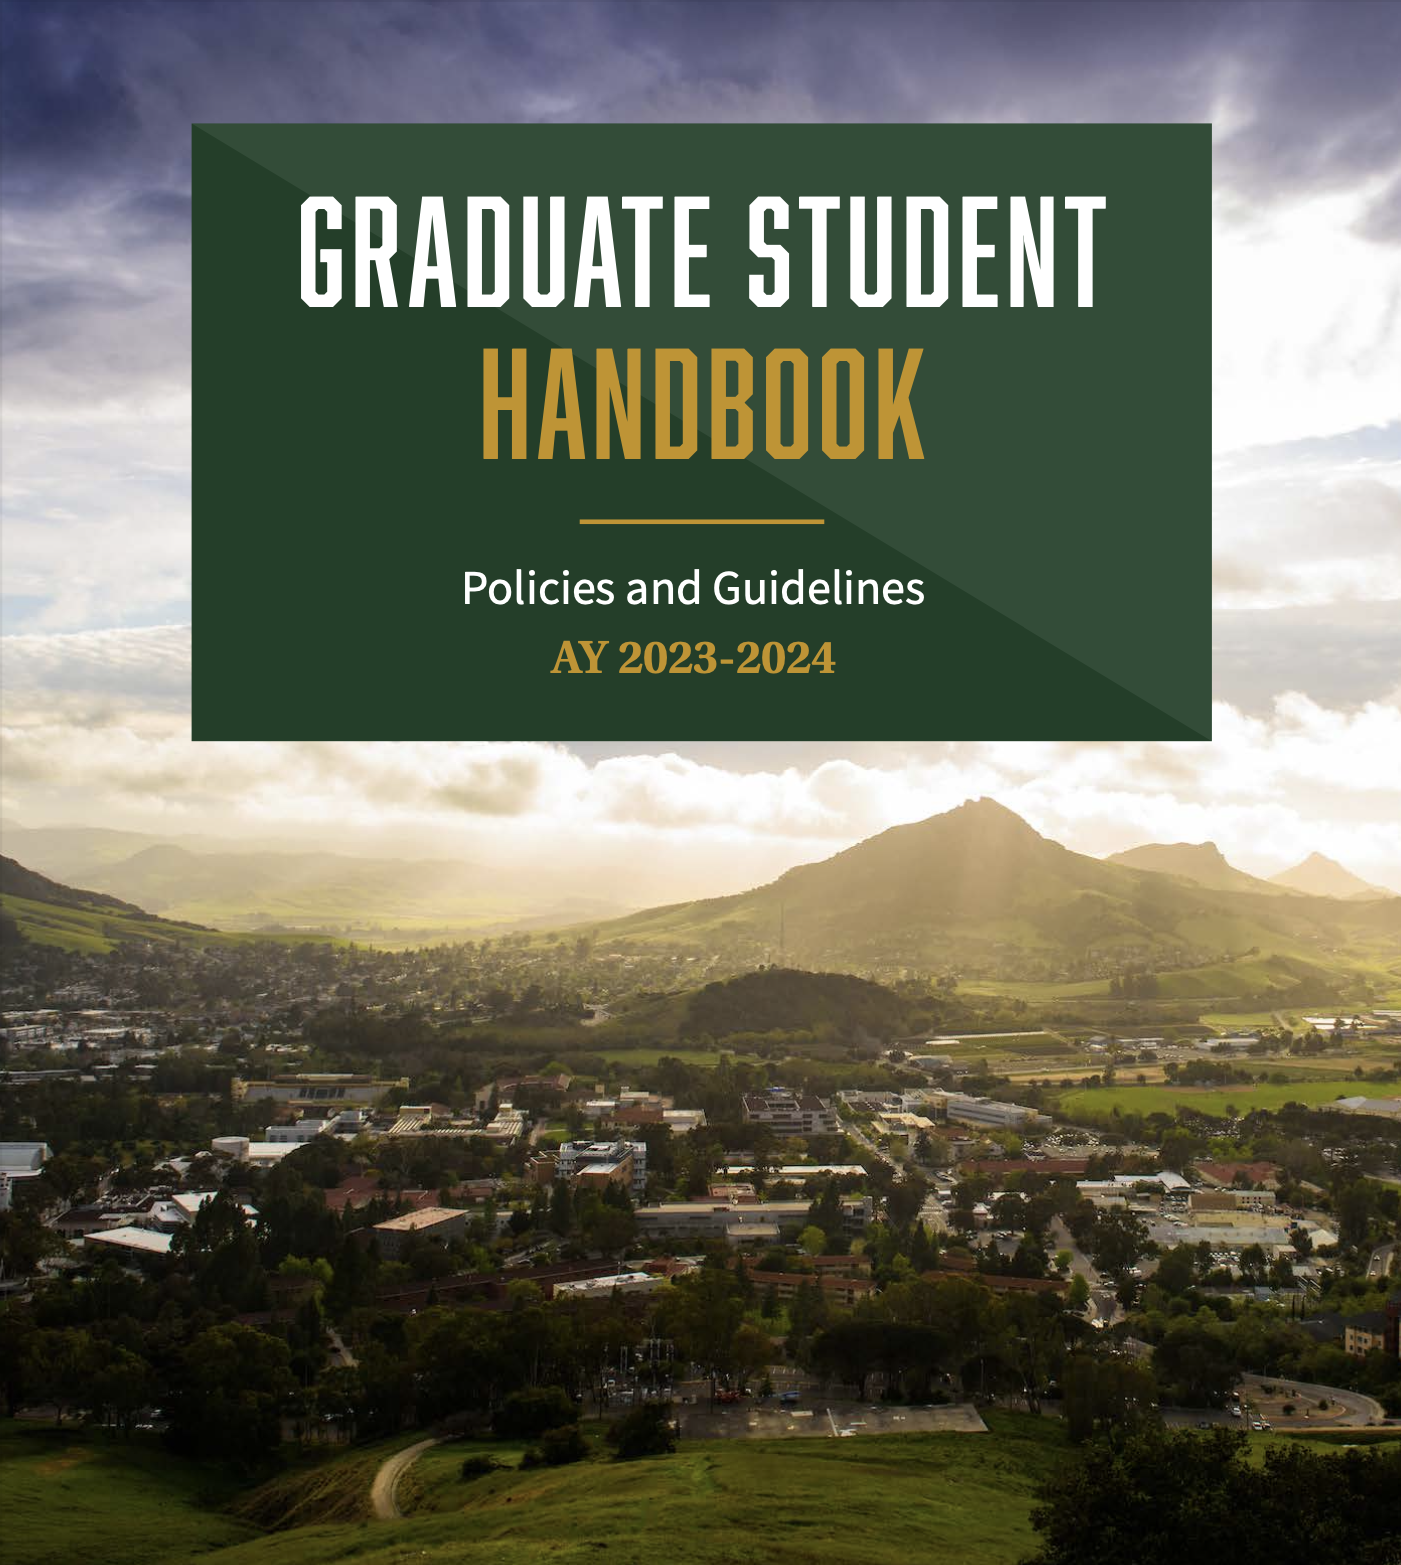 Graduate Student Handbook - Download PDF